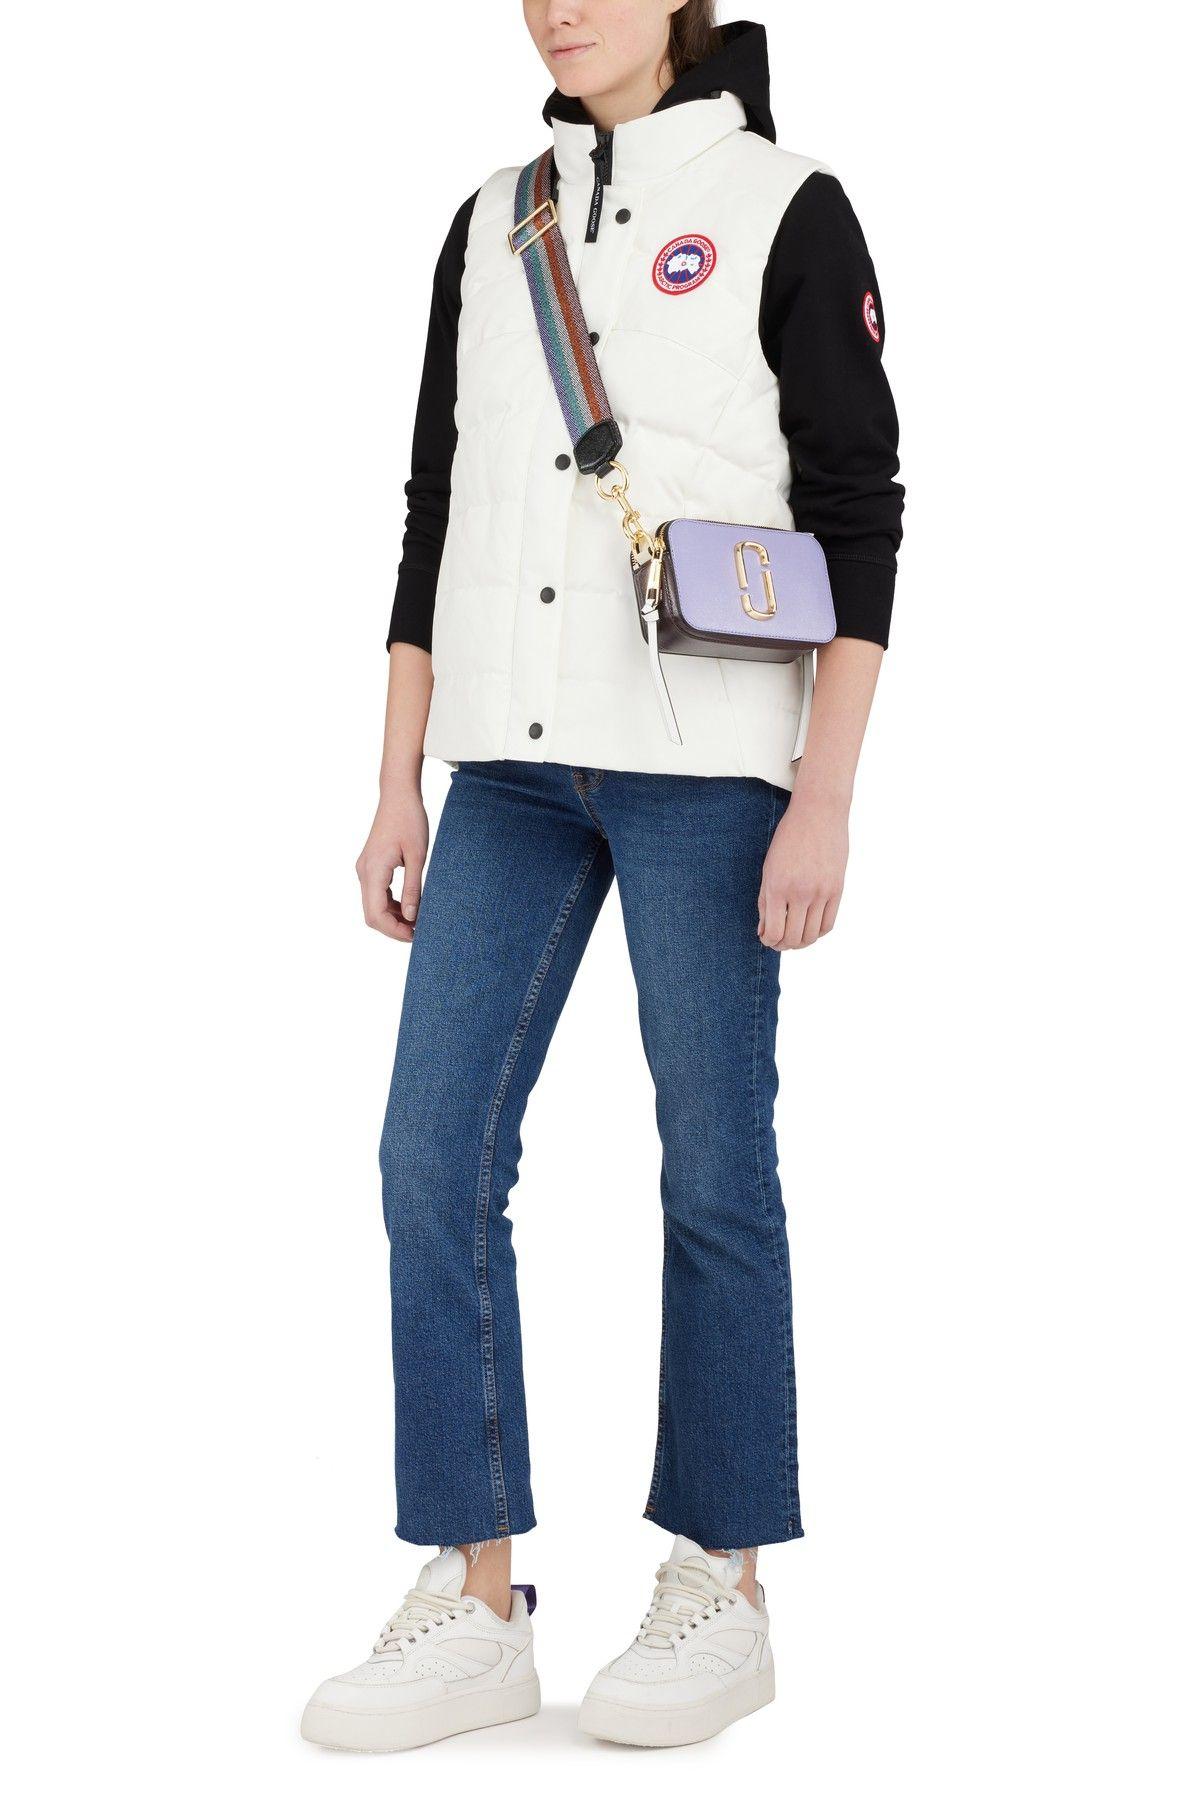 Buy MARC JACOBS Snapshot Ceramic Sling Bag with Detachable Strap, Purple &  Blue Color Women